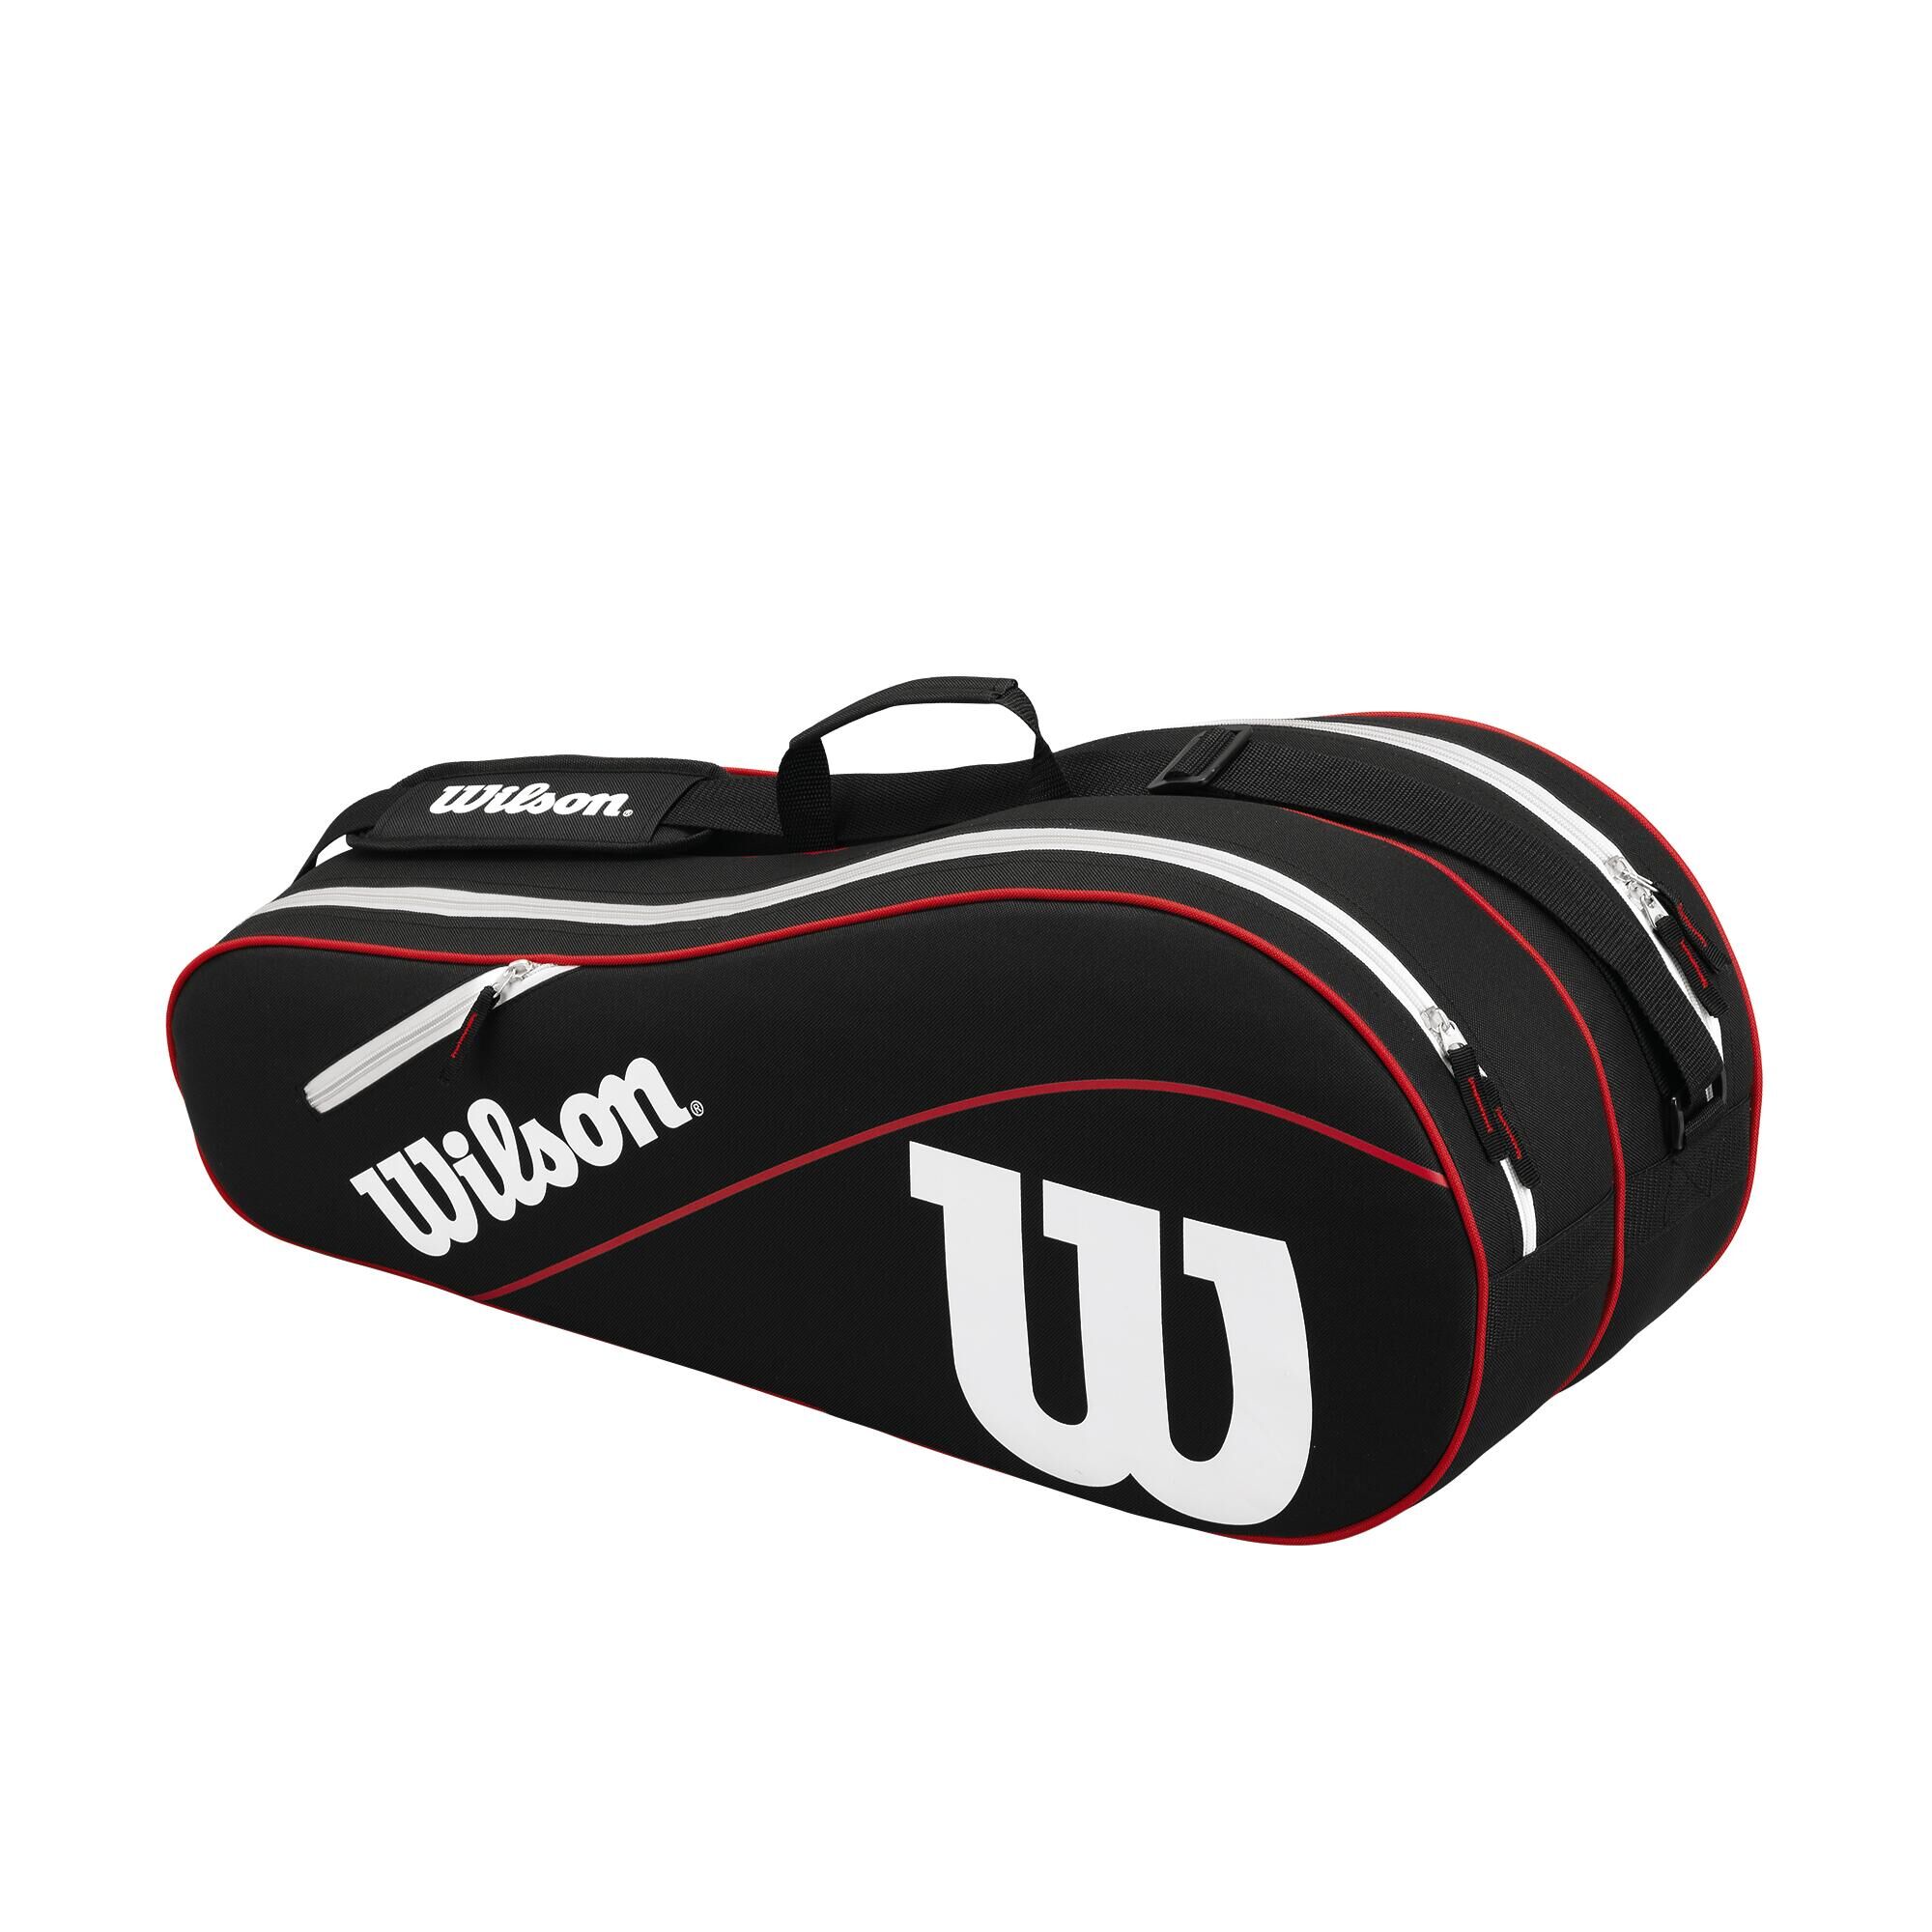 WILSON Wilson Advantage III 6 Racket Bag - Black/Red